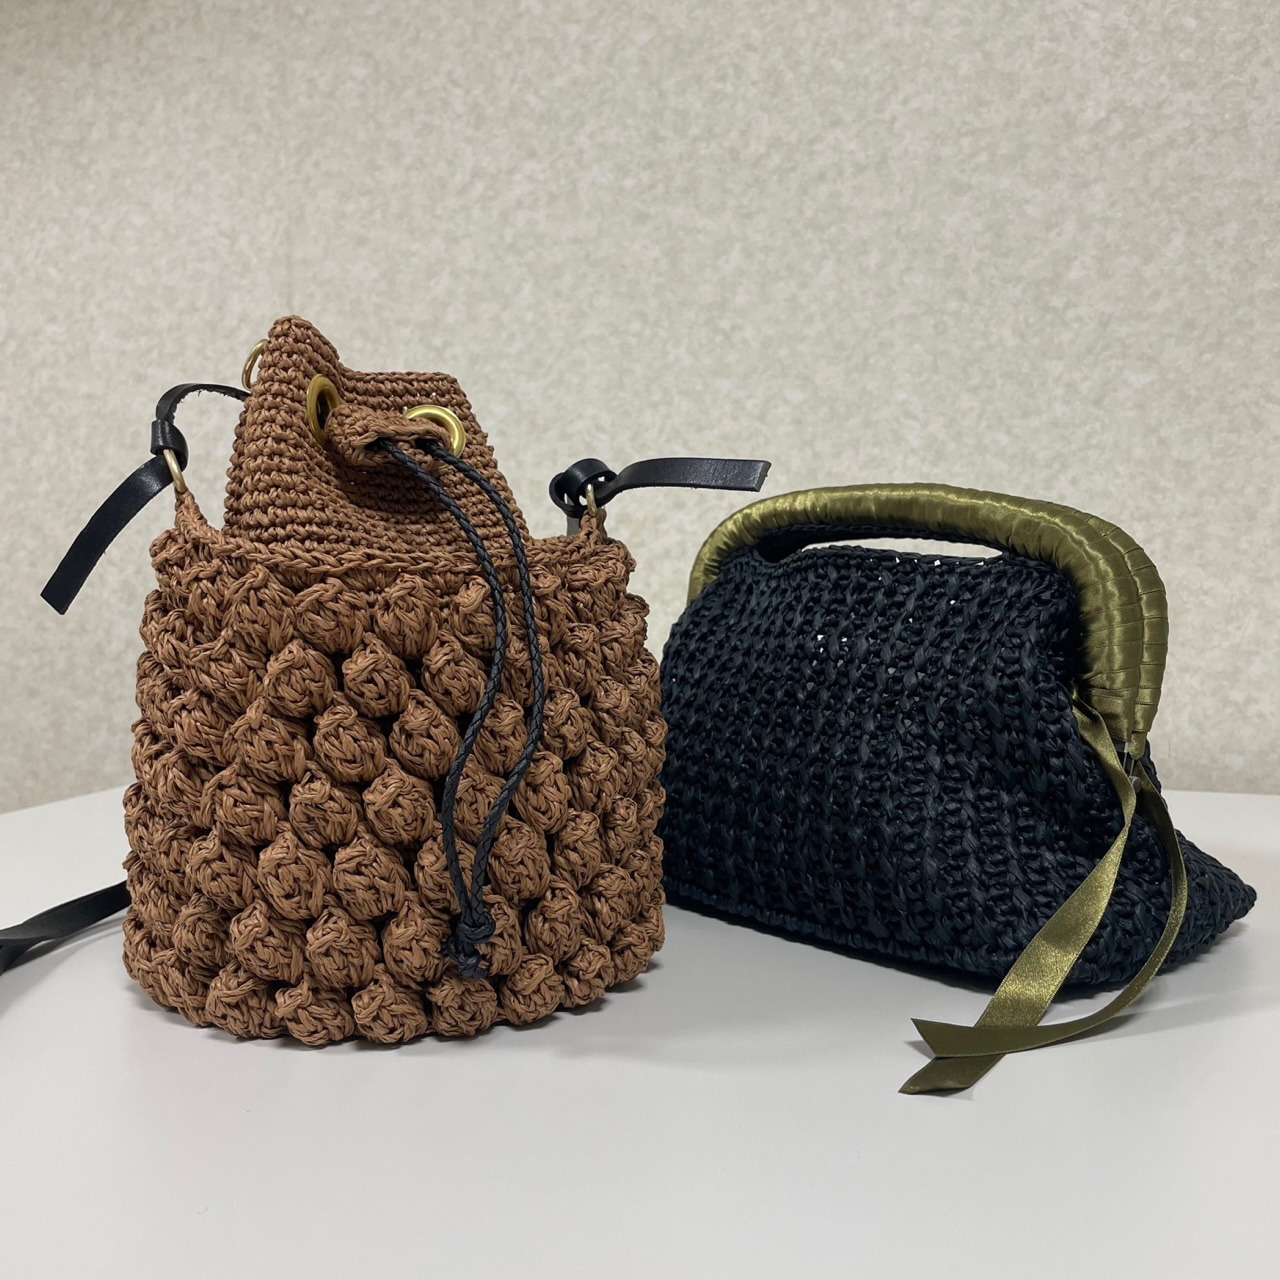 「SASAWASHI」と「マニラヘンプヤーン」で編んだ2種類のバッグ